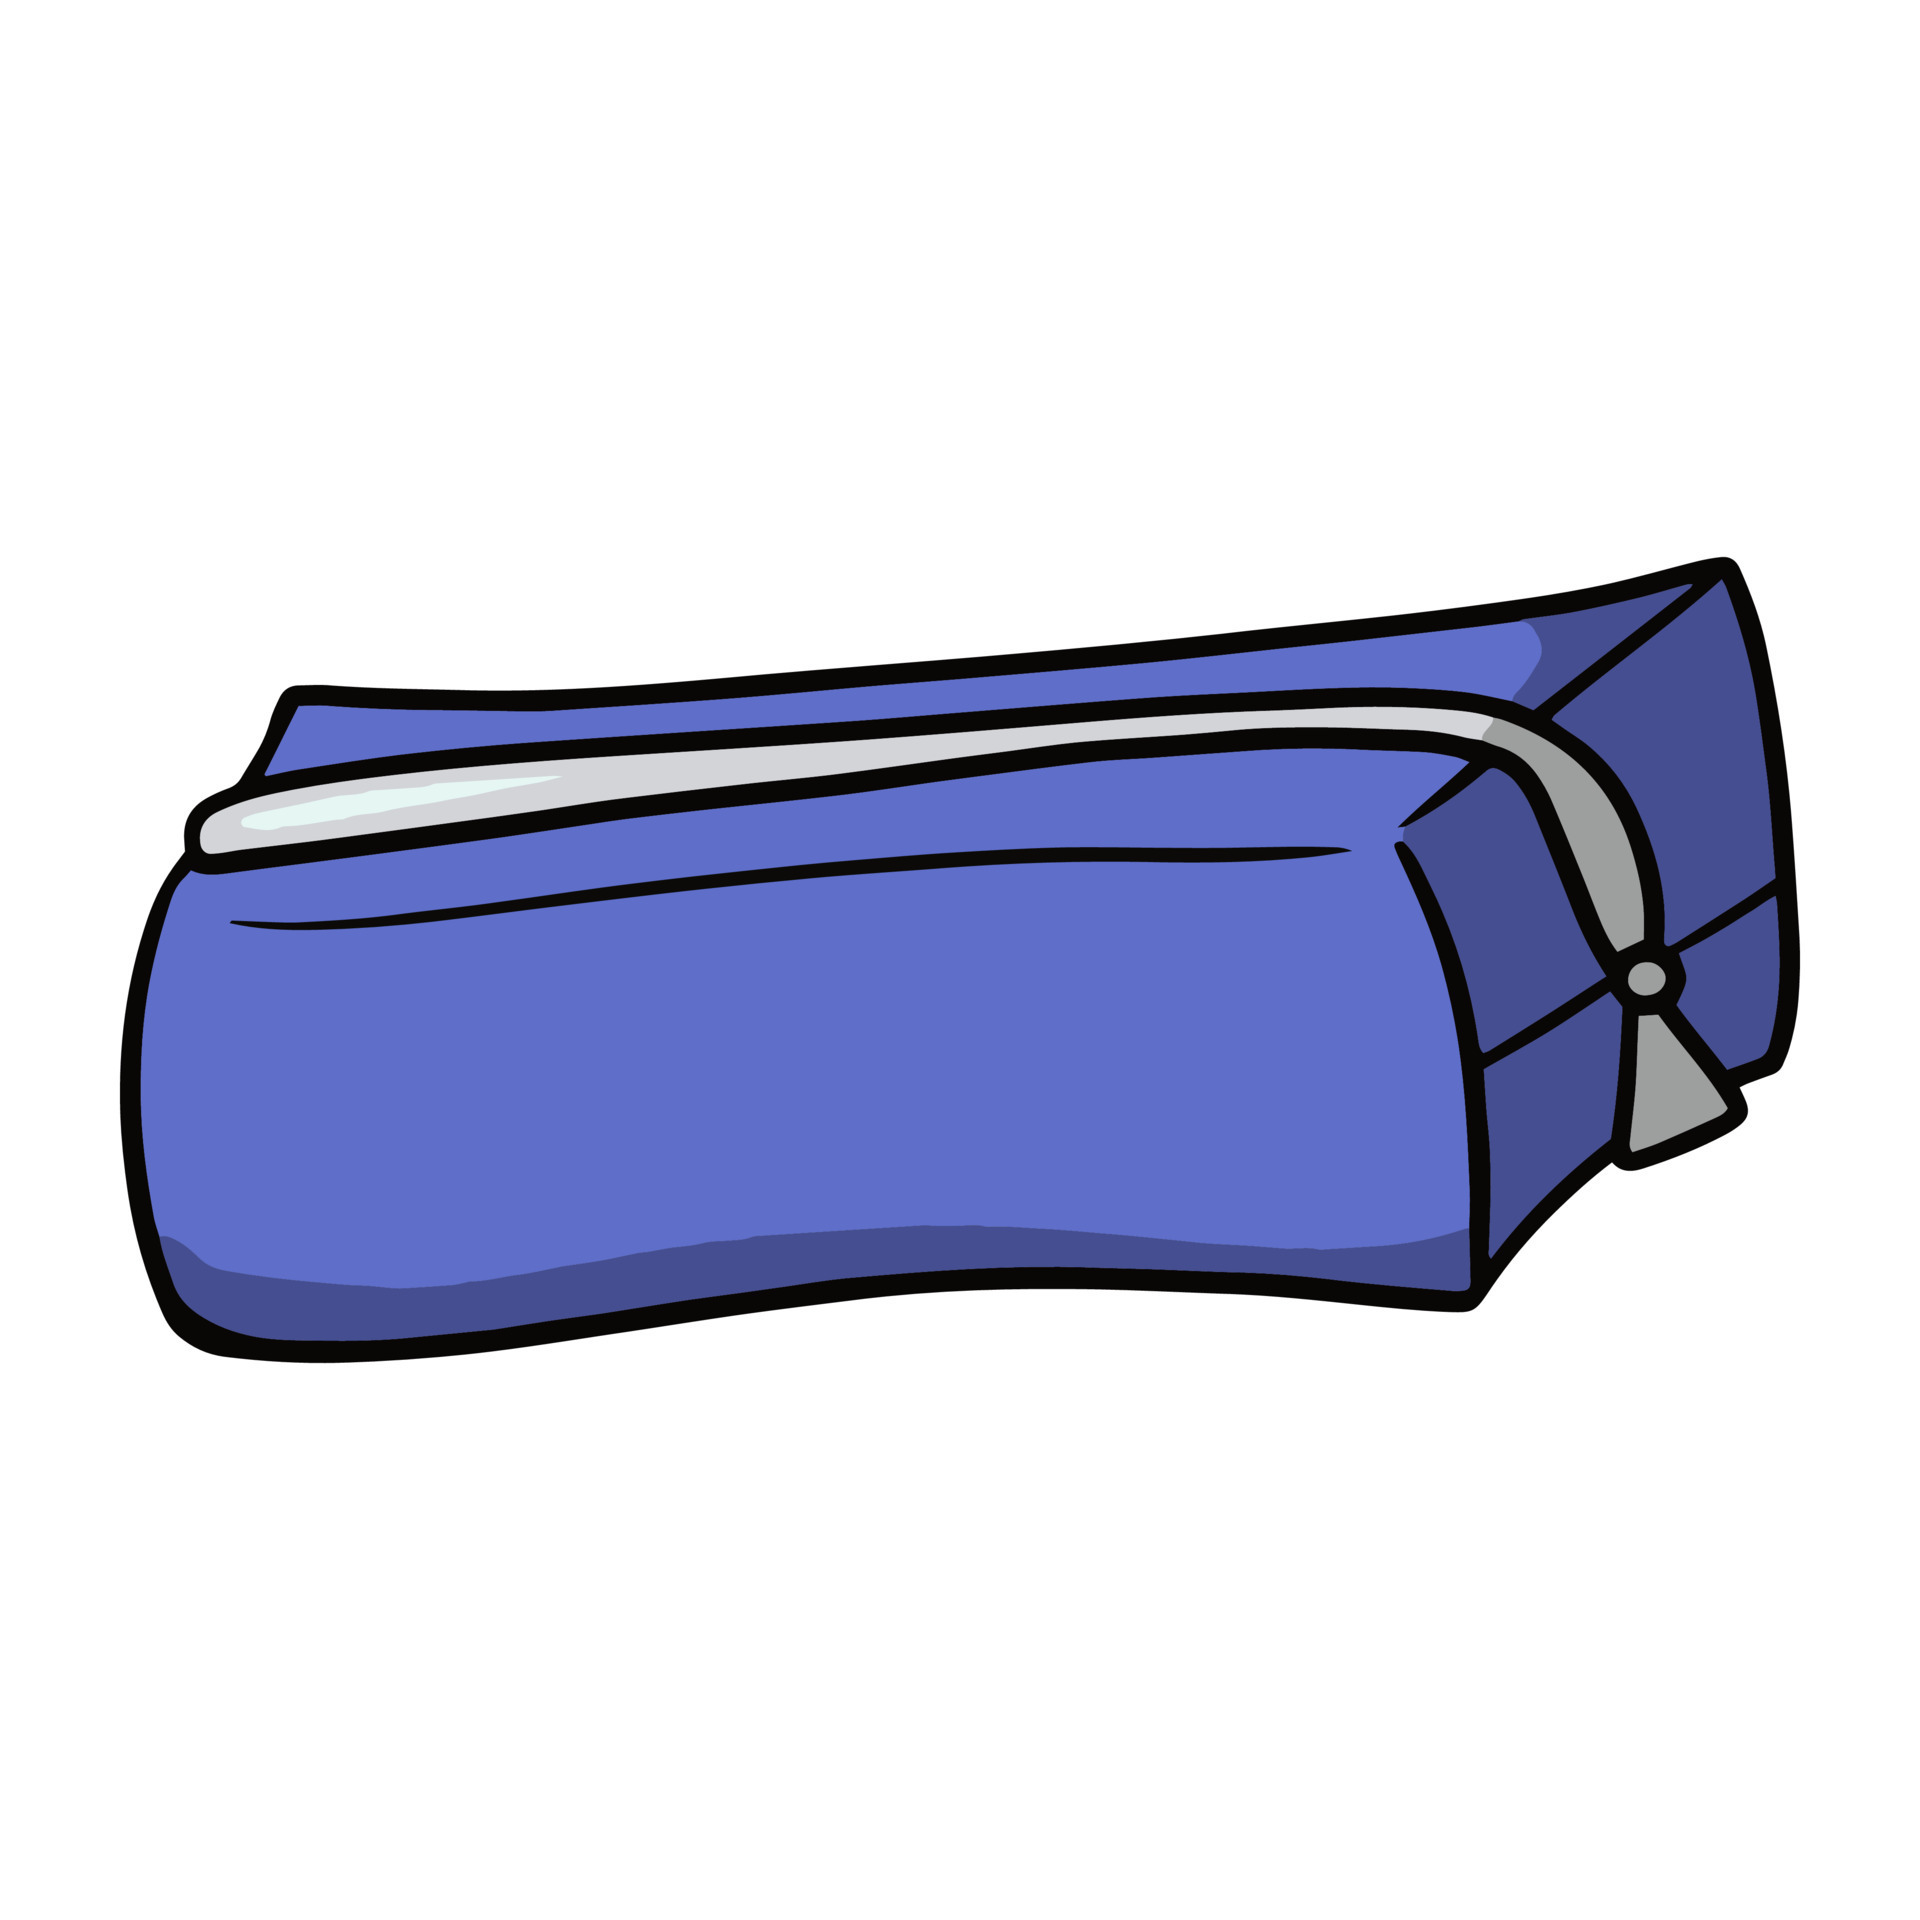 Blue pencil case, school lunch box, vector illustration in cartoon